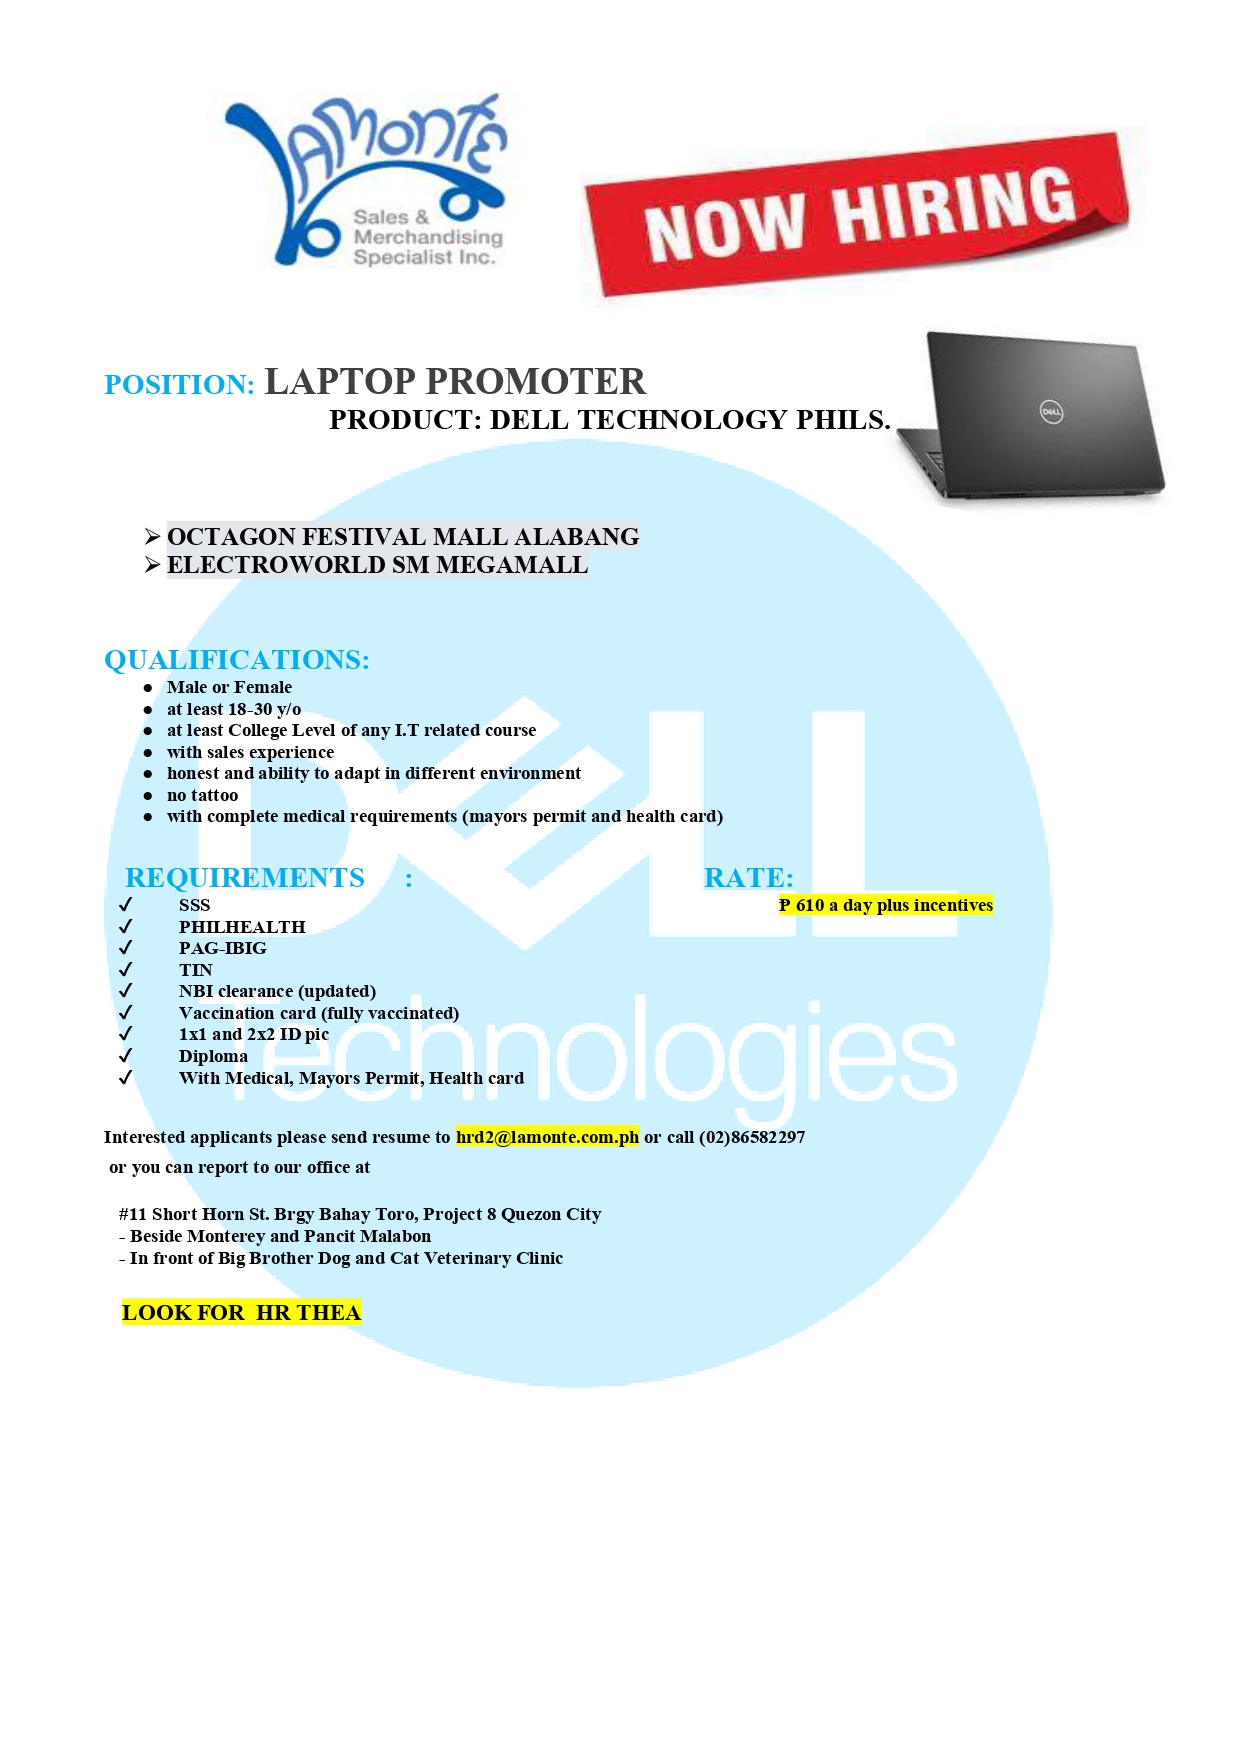 Laptop Promoter image